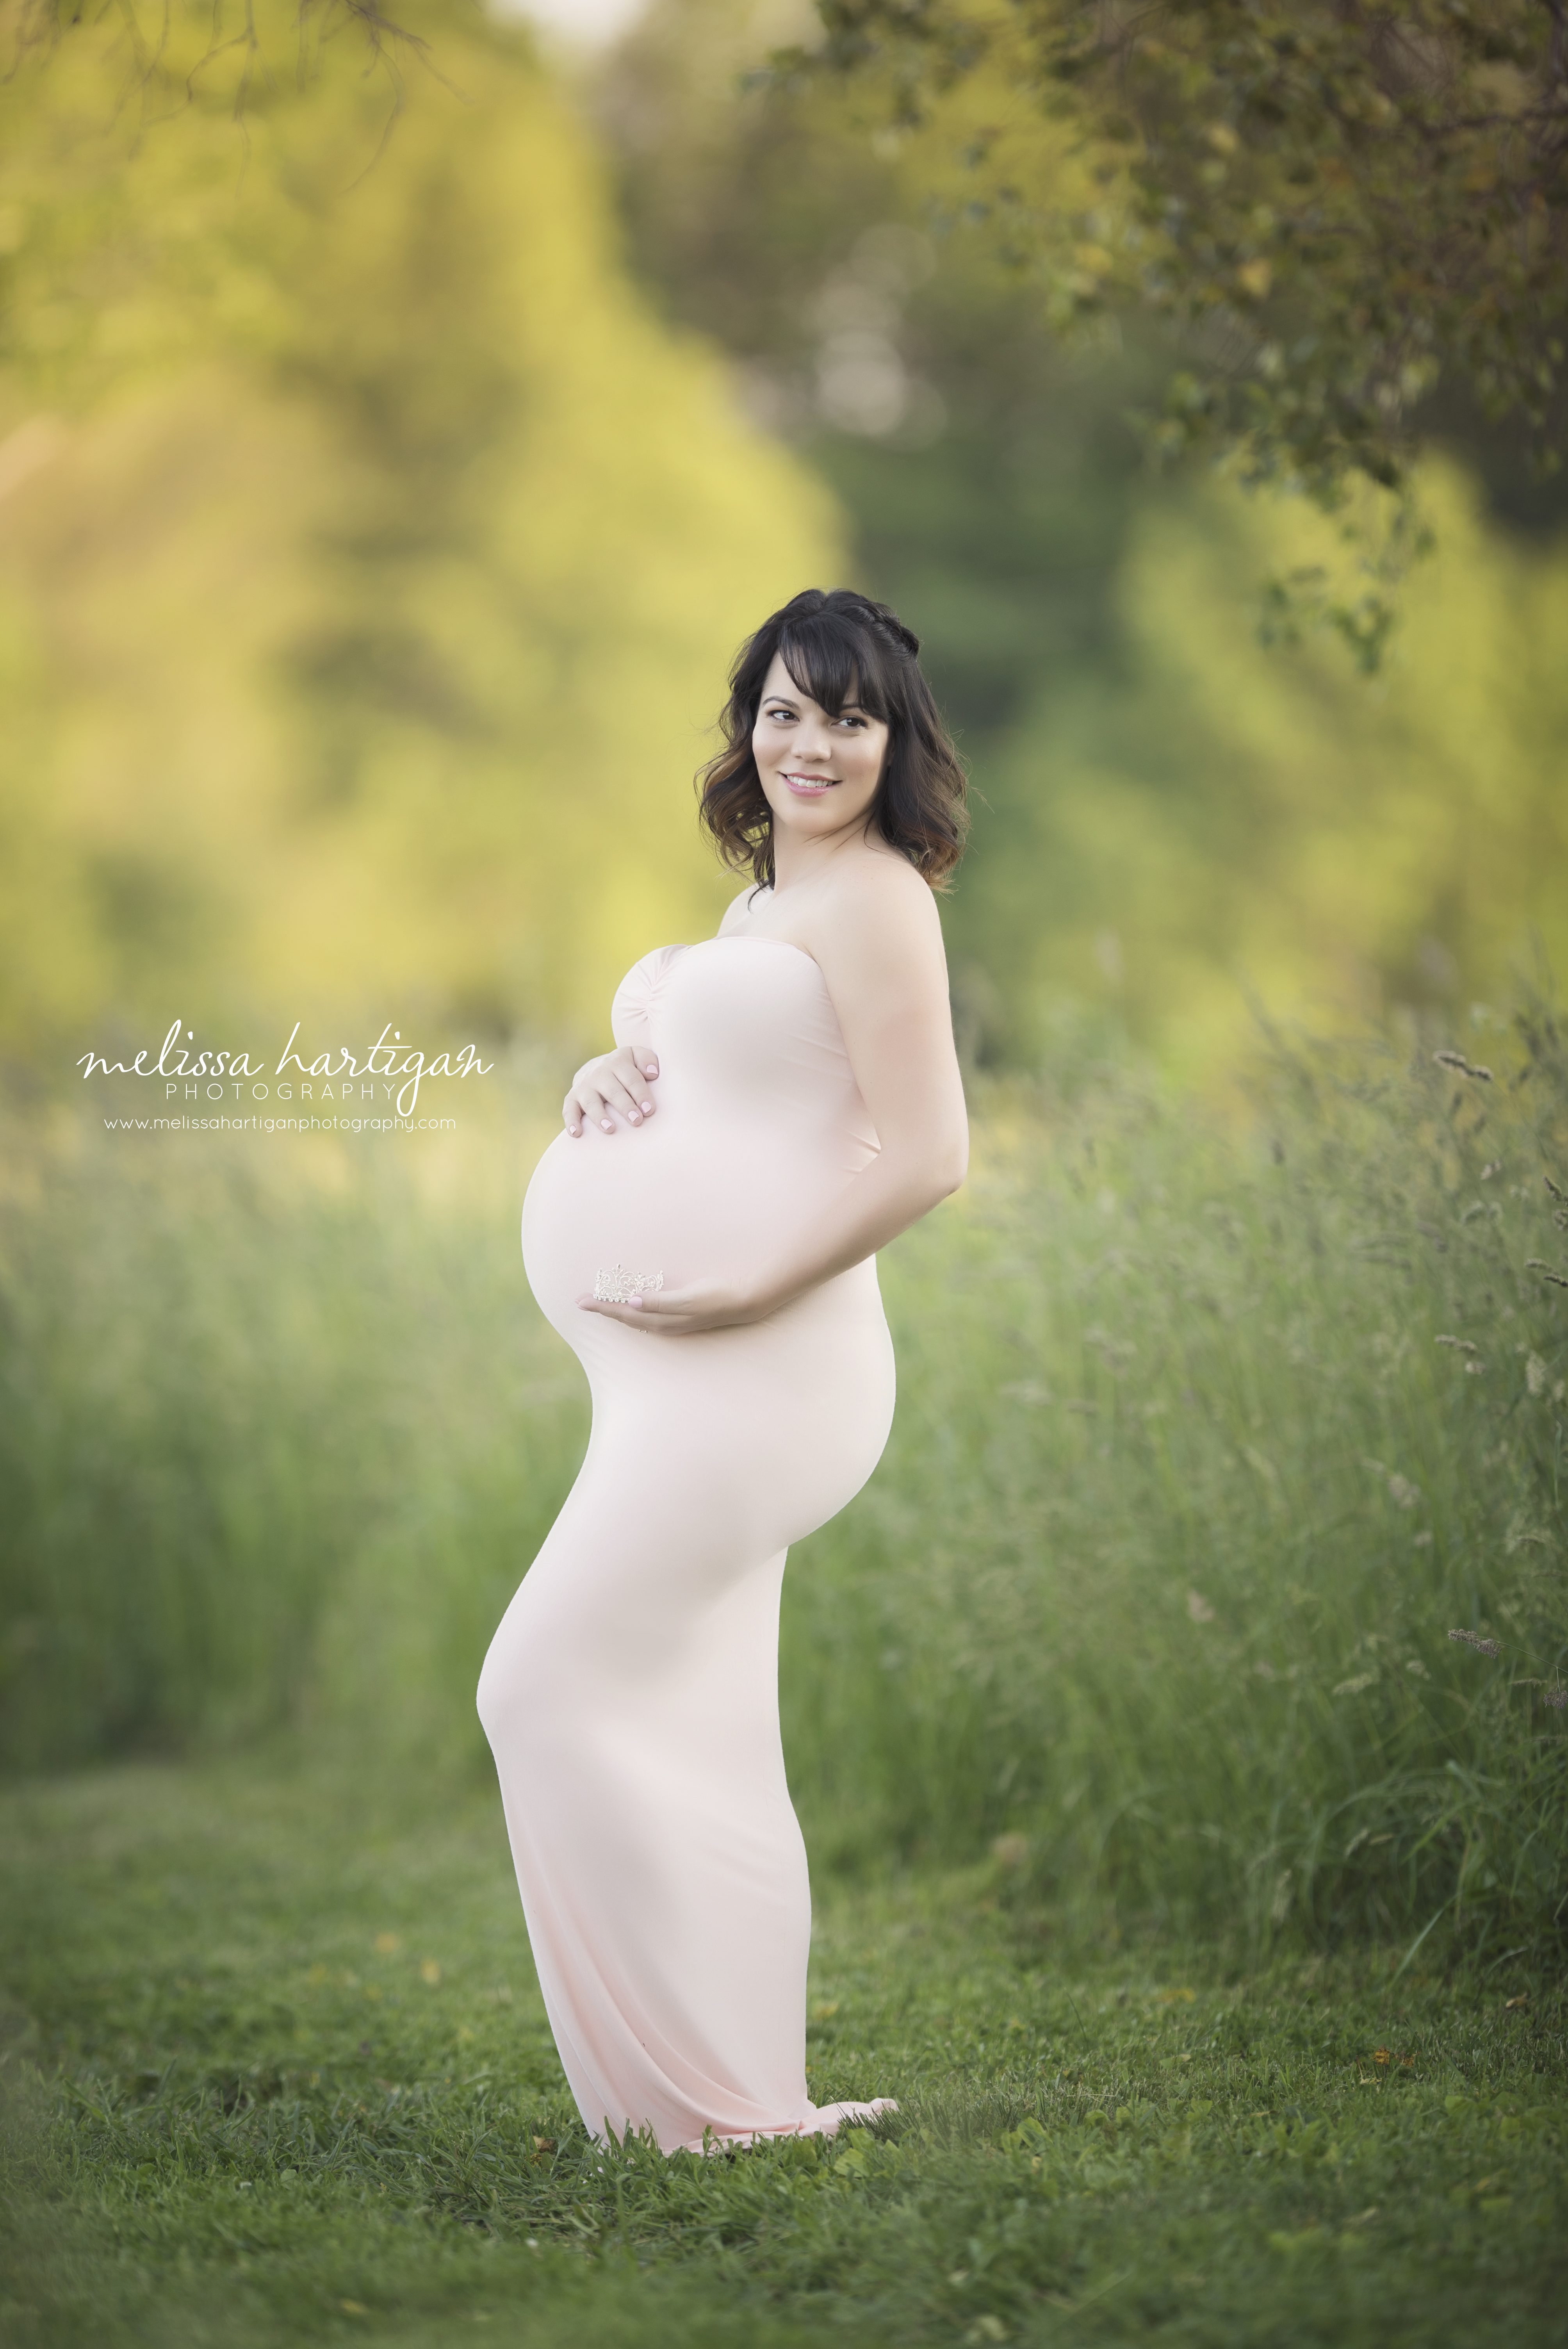 Melissa Hartigan Photography , CT Newborn, Children & Family Photographer